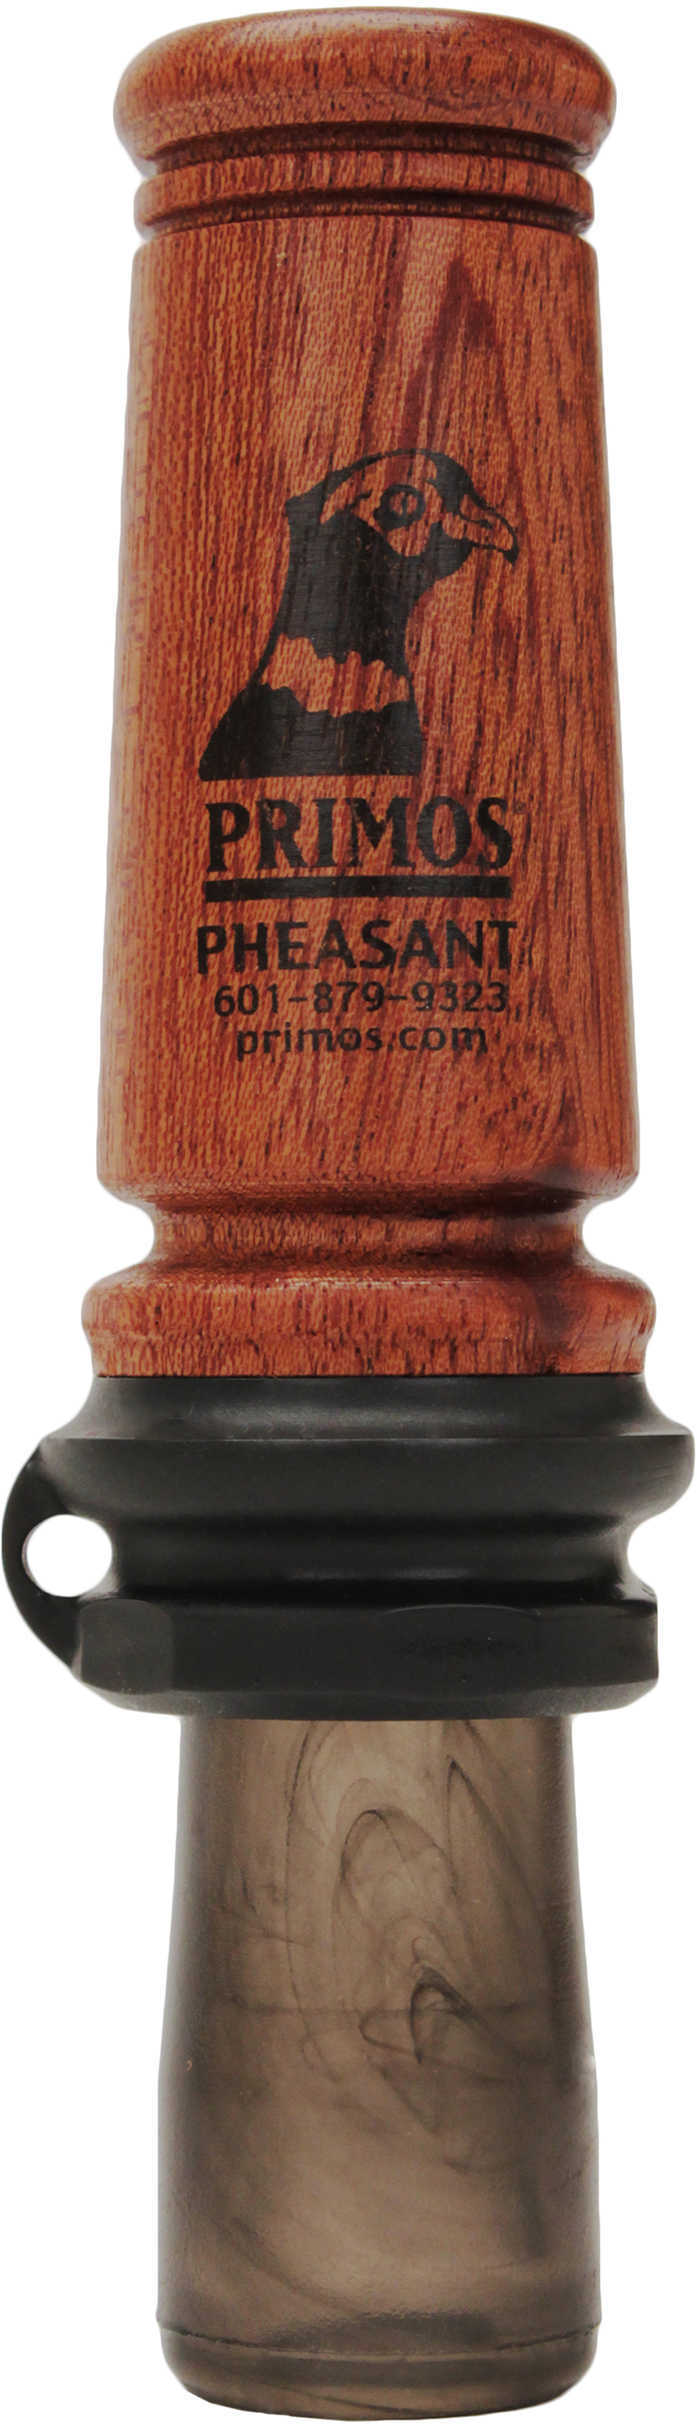 Primos Pheasant Call